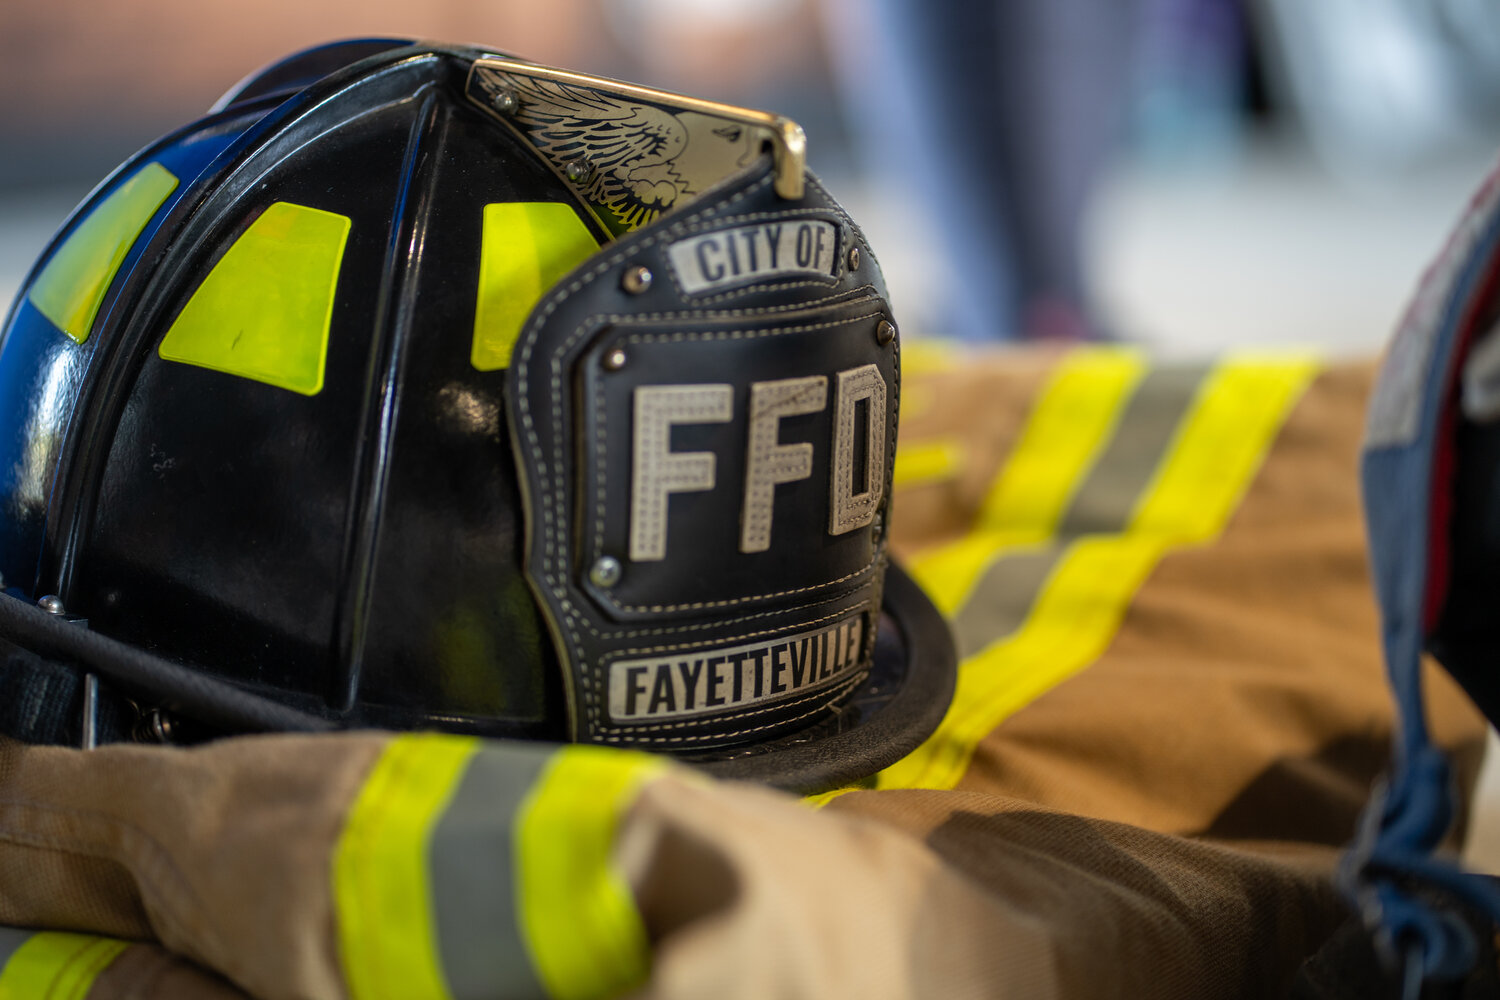 Fayetteville Fire Department Helmet for Remembrance